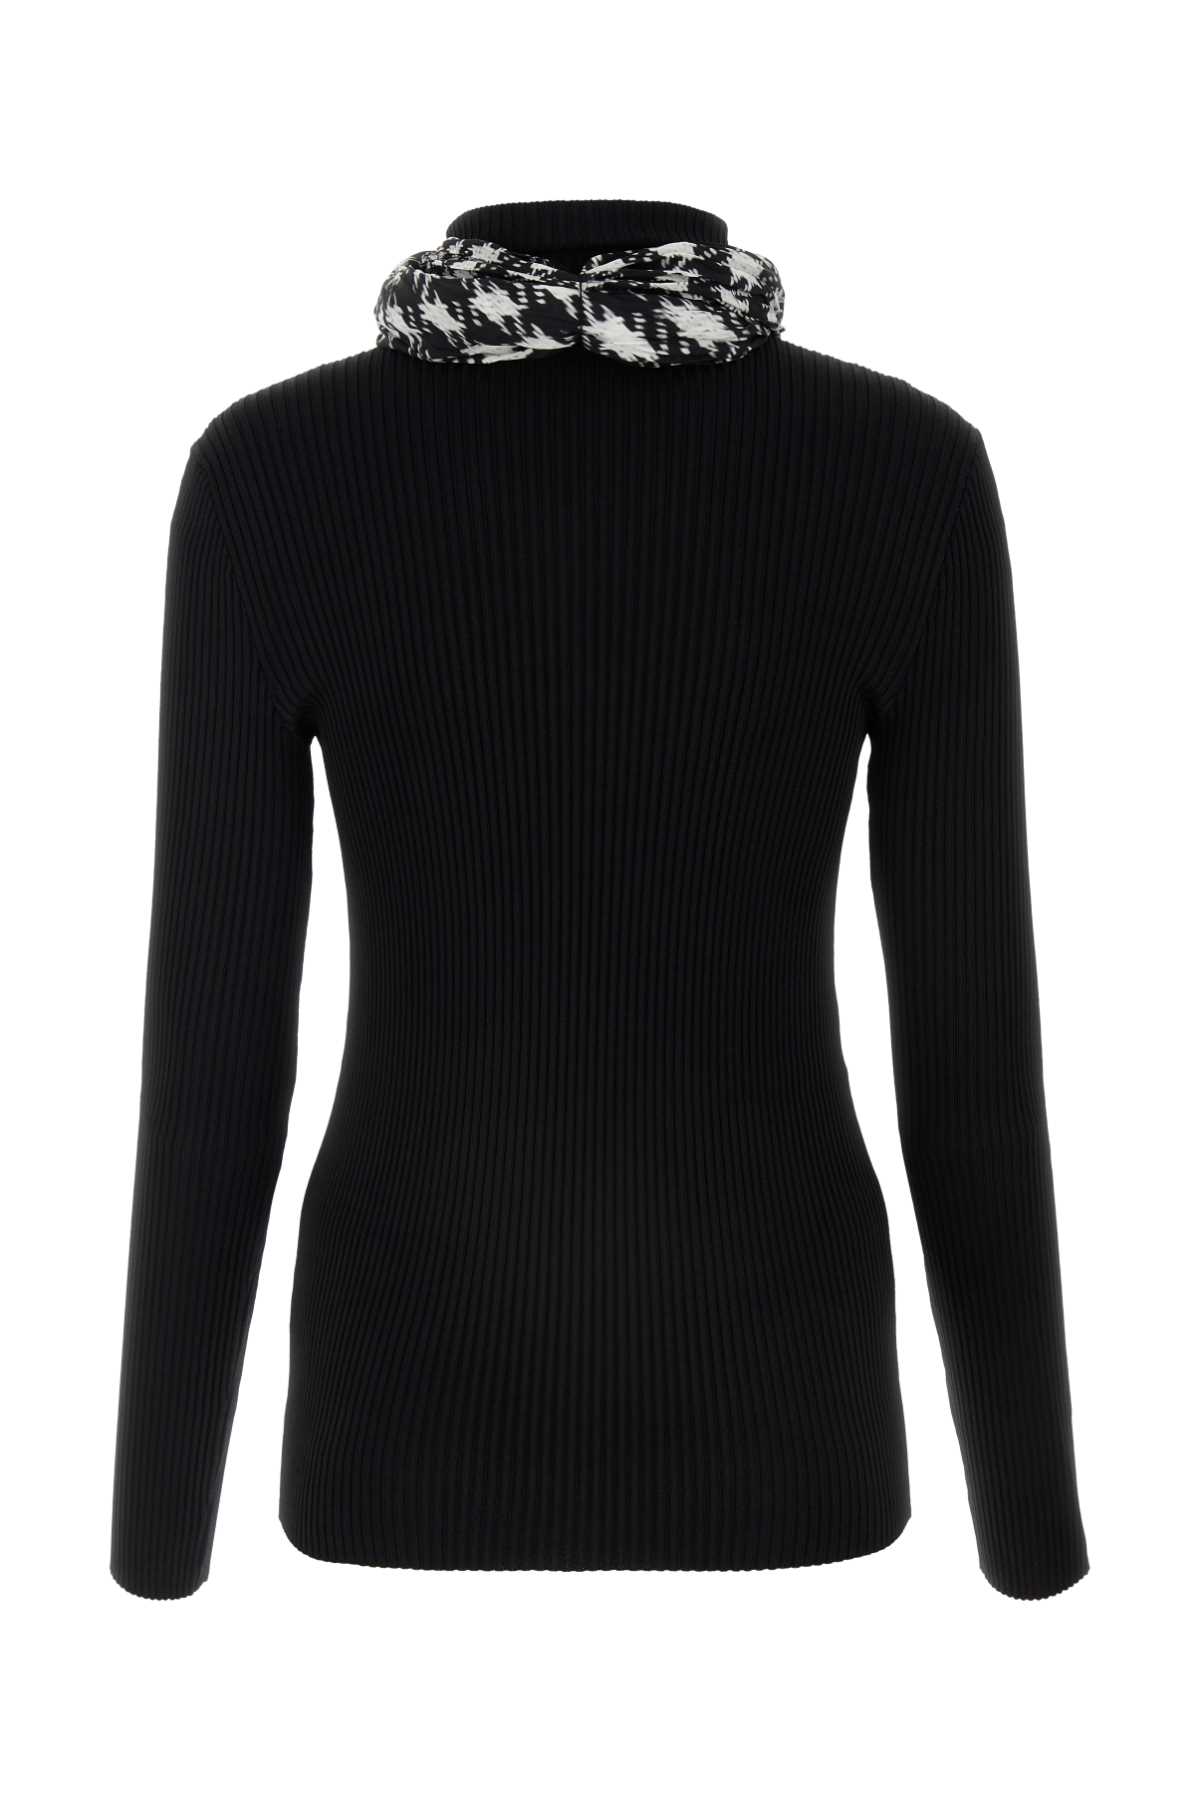 Burberry Black Viscose Blend Sweater